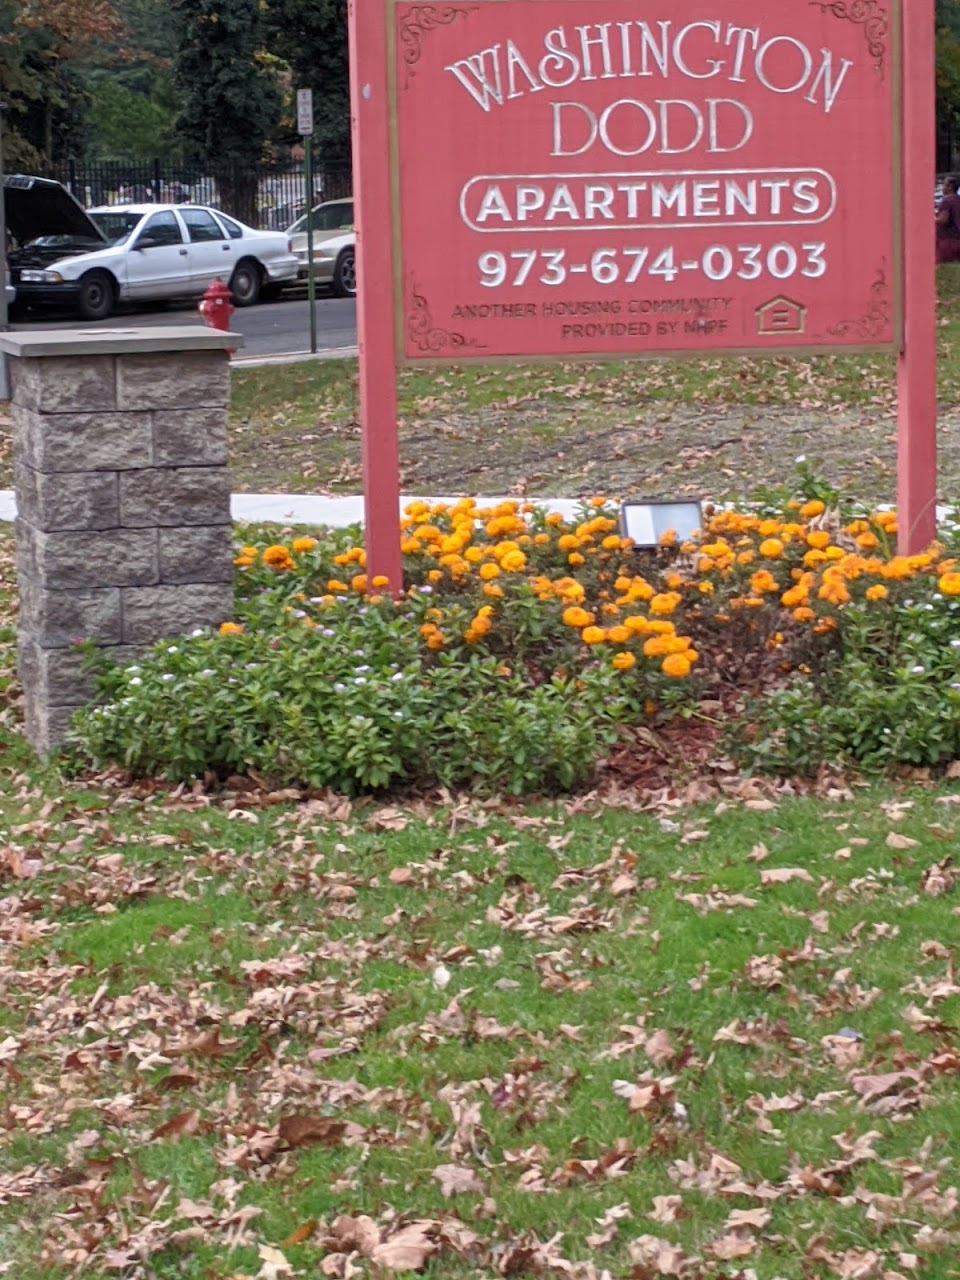 Photo of WASHINGTON DODD APARTMENTS. Affordable housing located at 587 CARROLL ST. ORANGE, NJ 07050